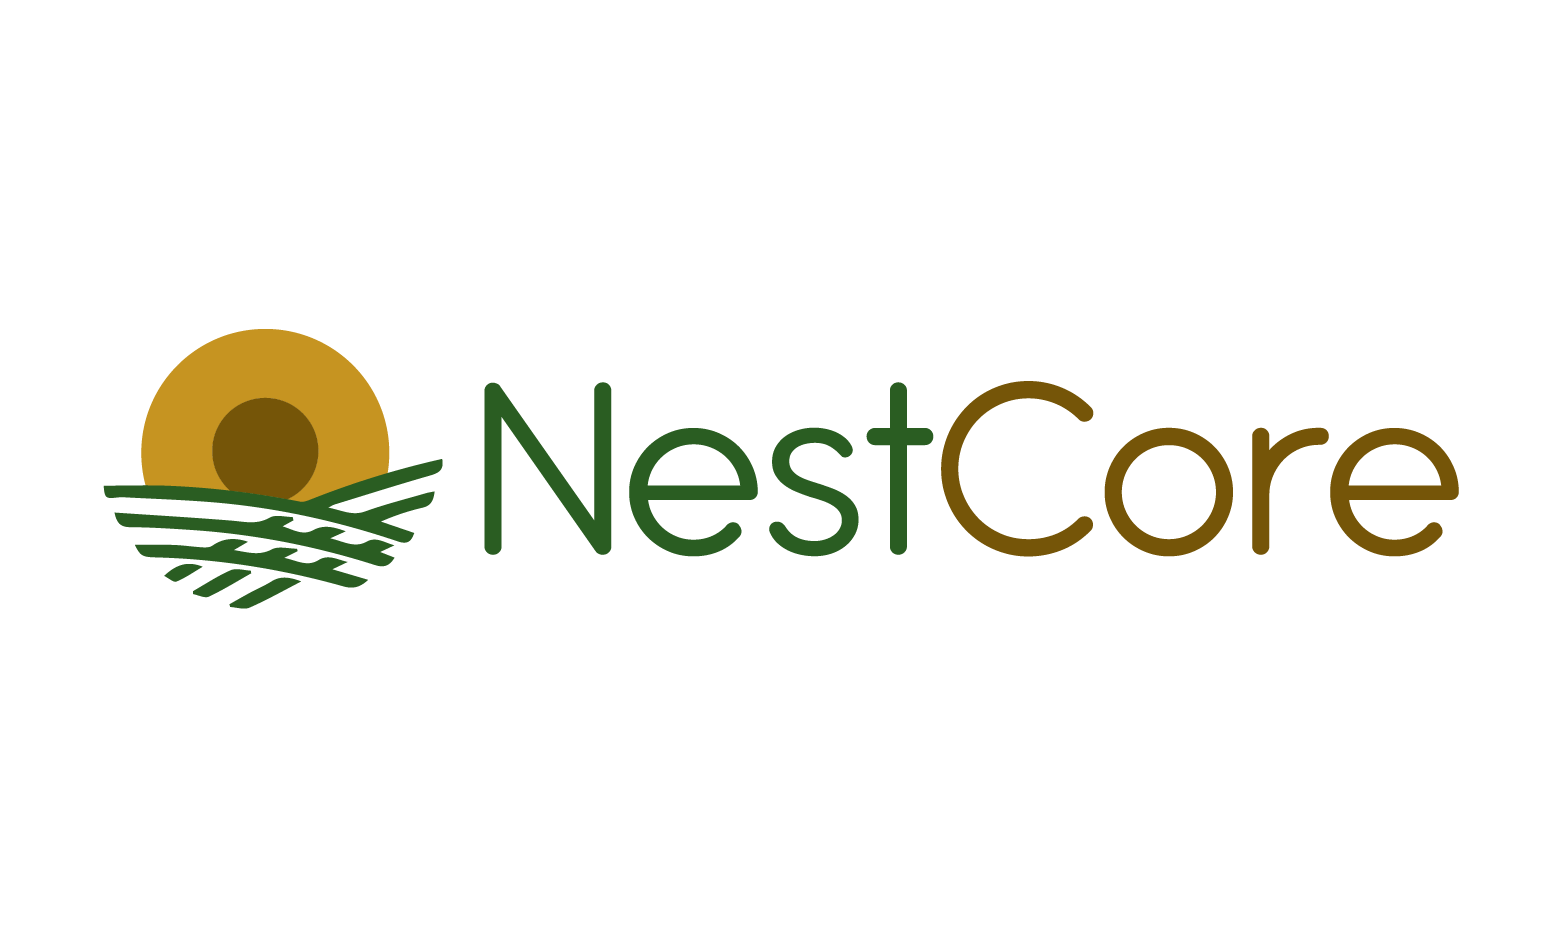 NestCore.com - Creative brandable domain for sale